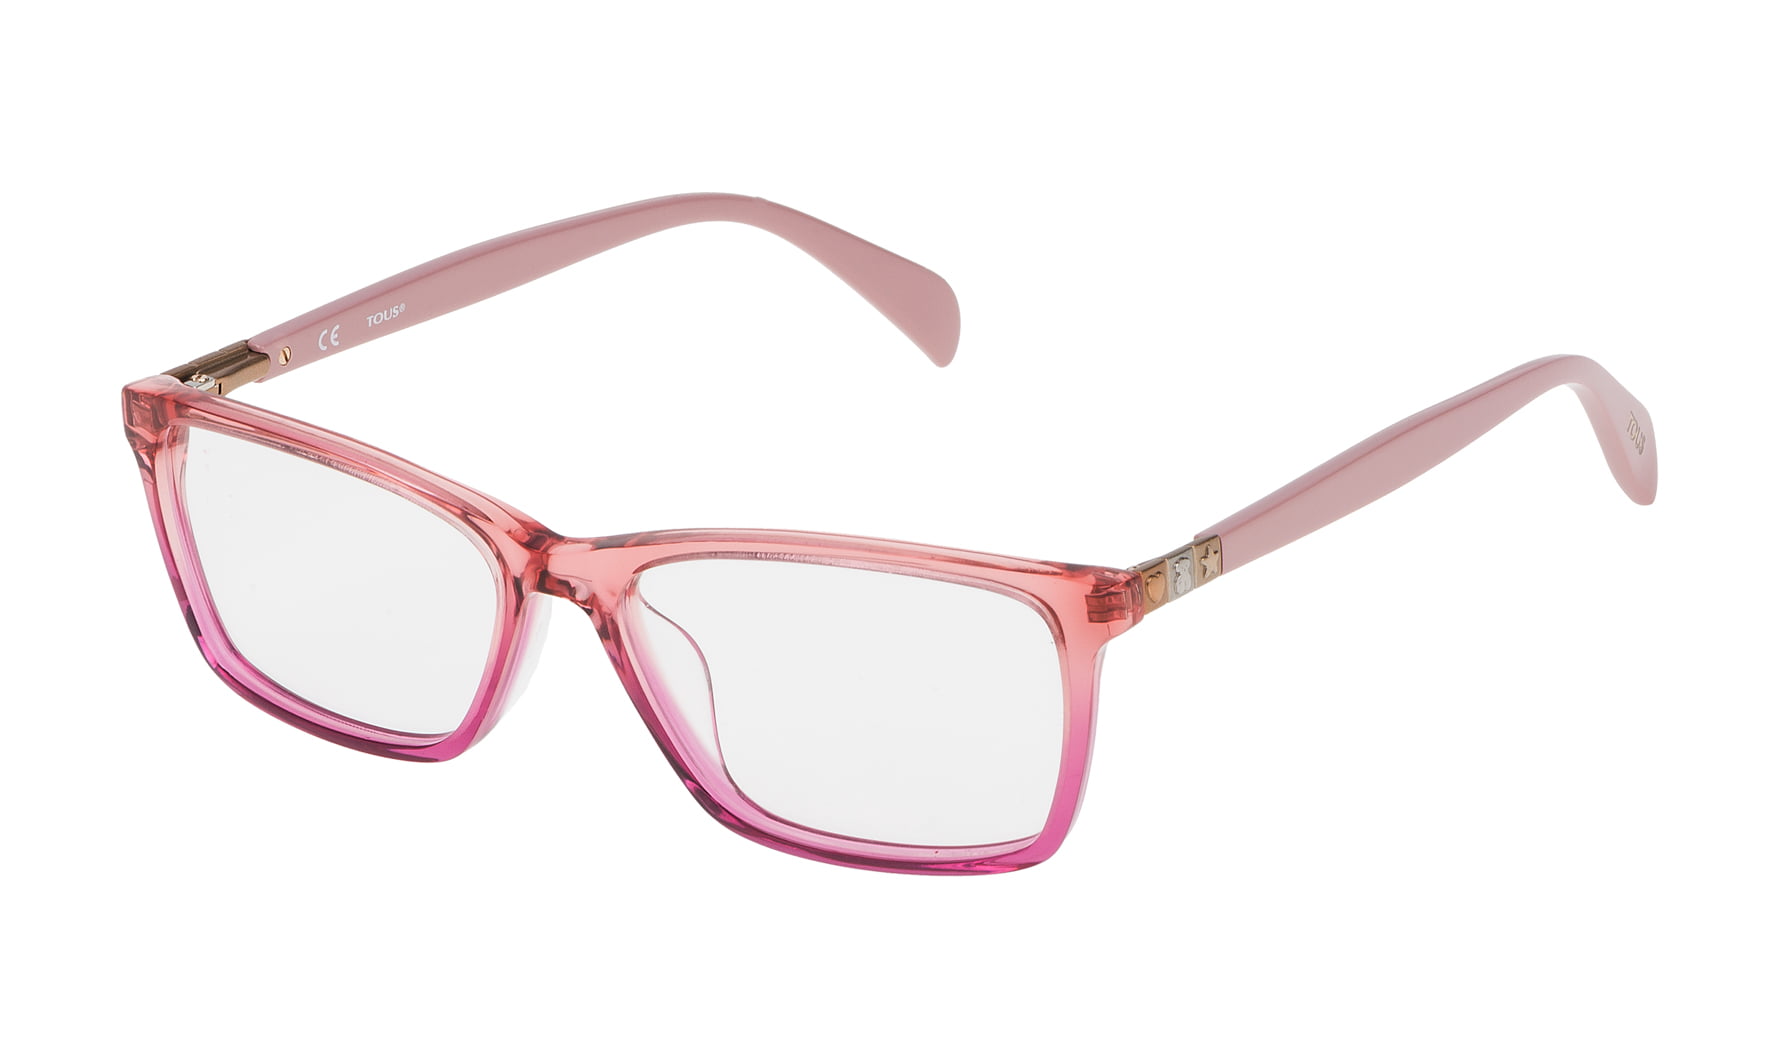 Eyeglasses Frame Tous Pink Women Vto937530n92 Walmart Canada 